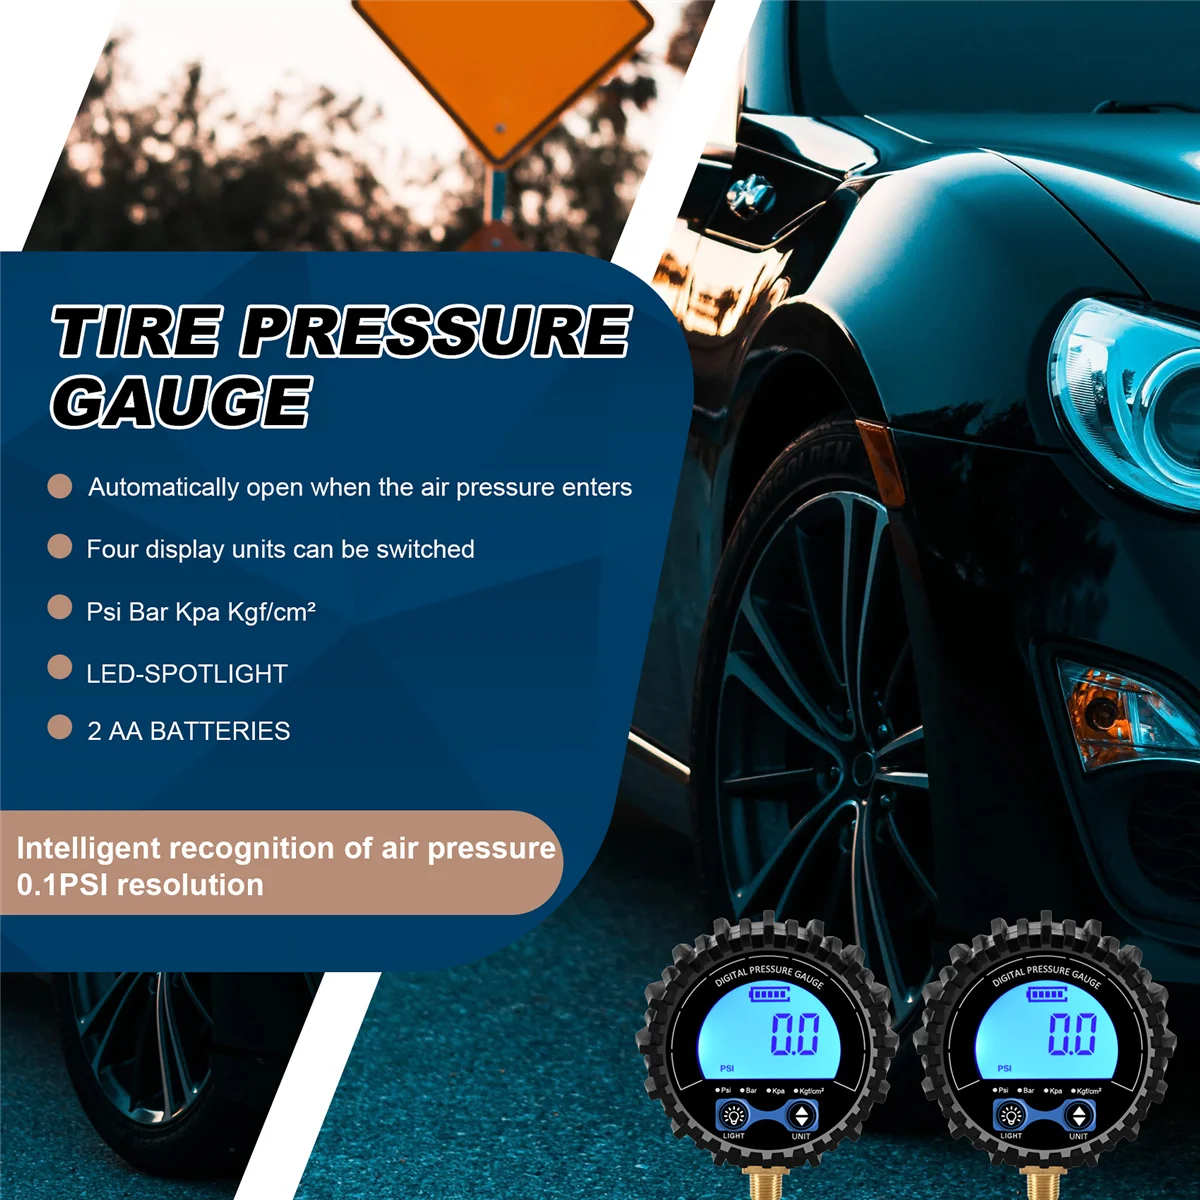 Tire Pressure Gauge Digital Tire Tester Display Air Pressure Manometer Quick Connect Coupler Thread 1/8